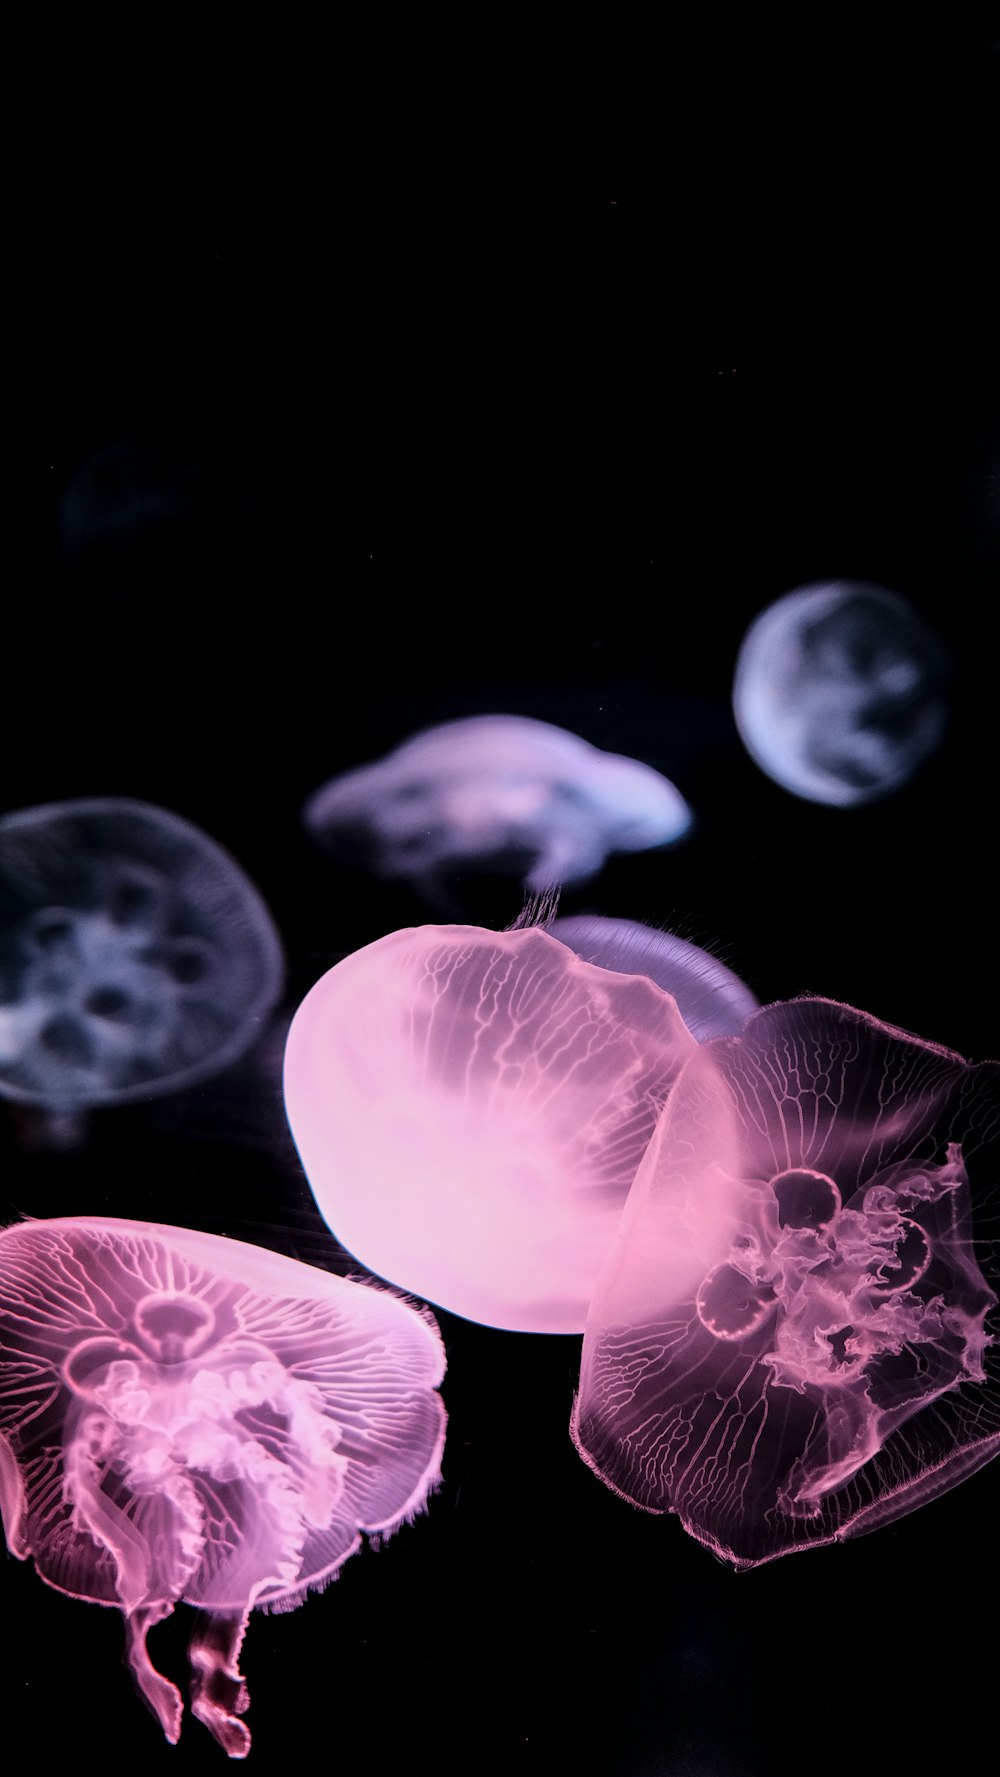 White Jellyfish In Water With Black Background Photo Free Animal Image On Unsplash